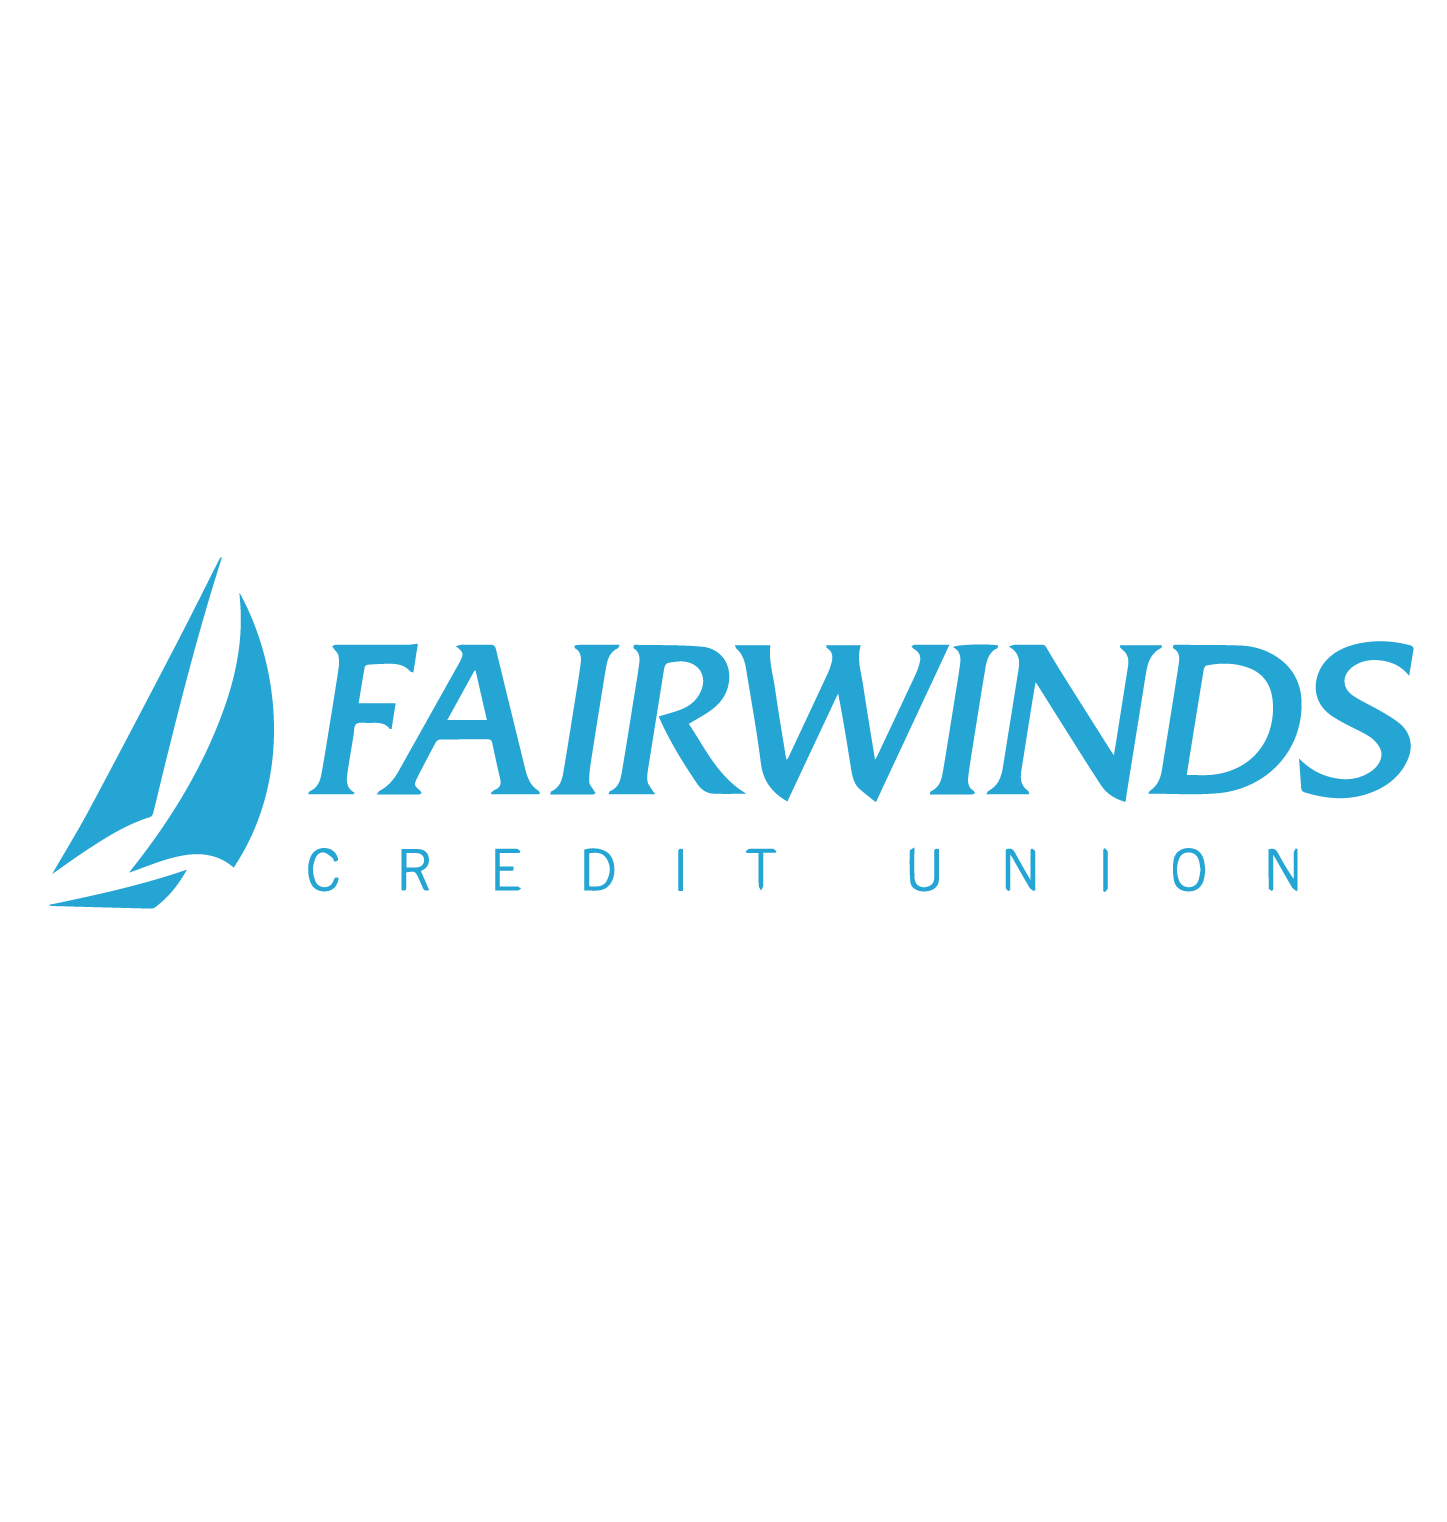 Fairwinds-01.png